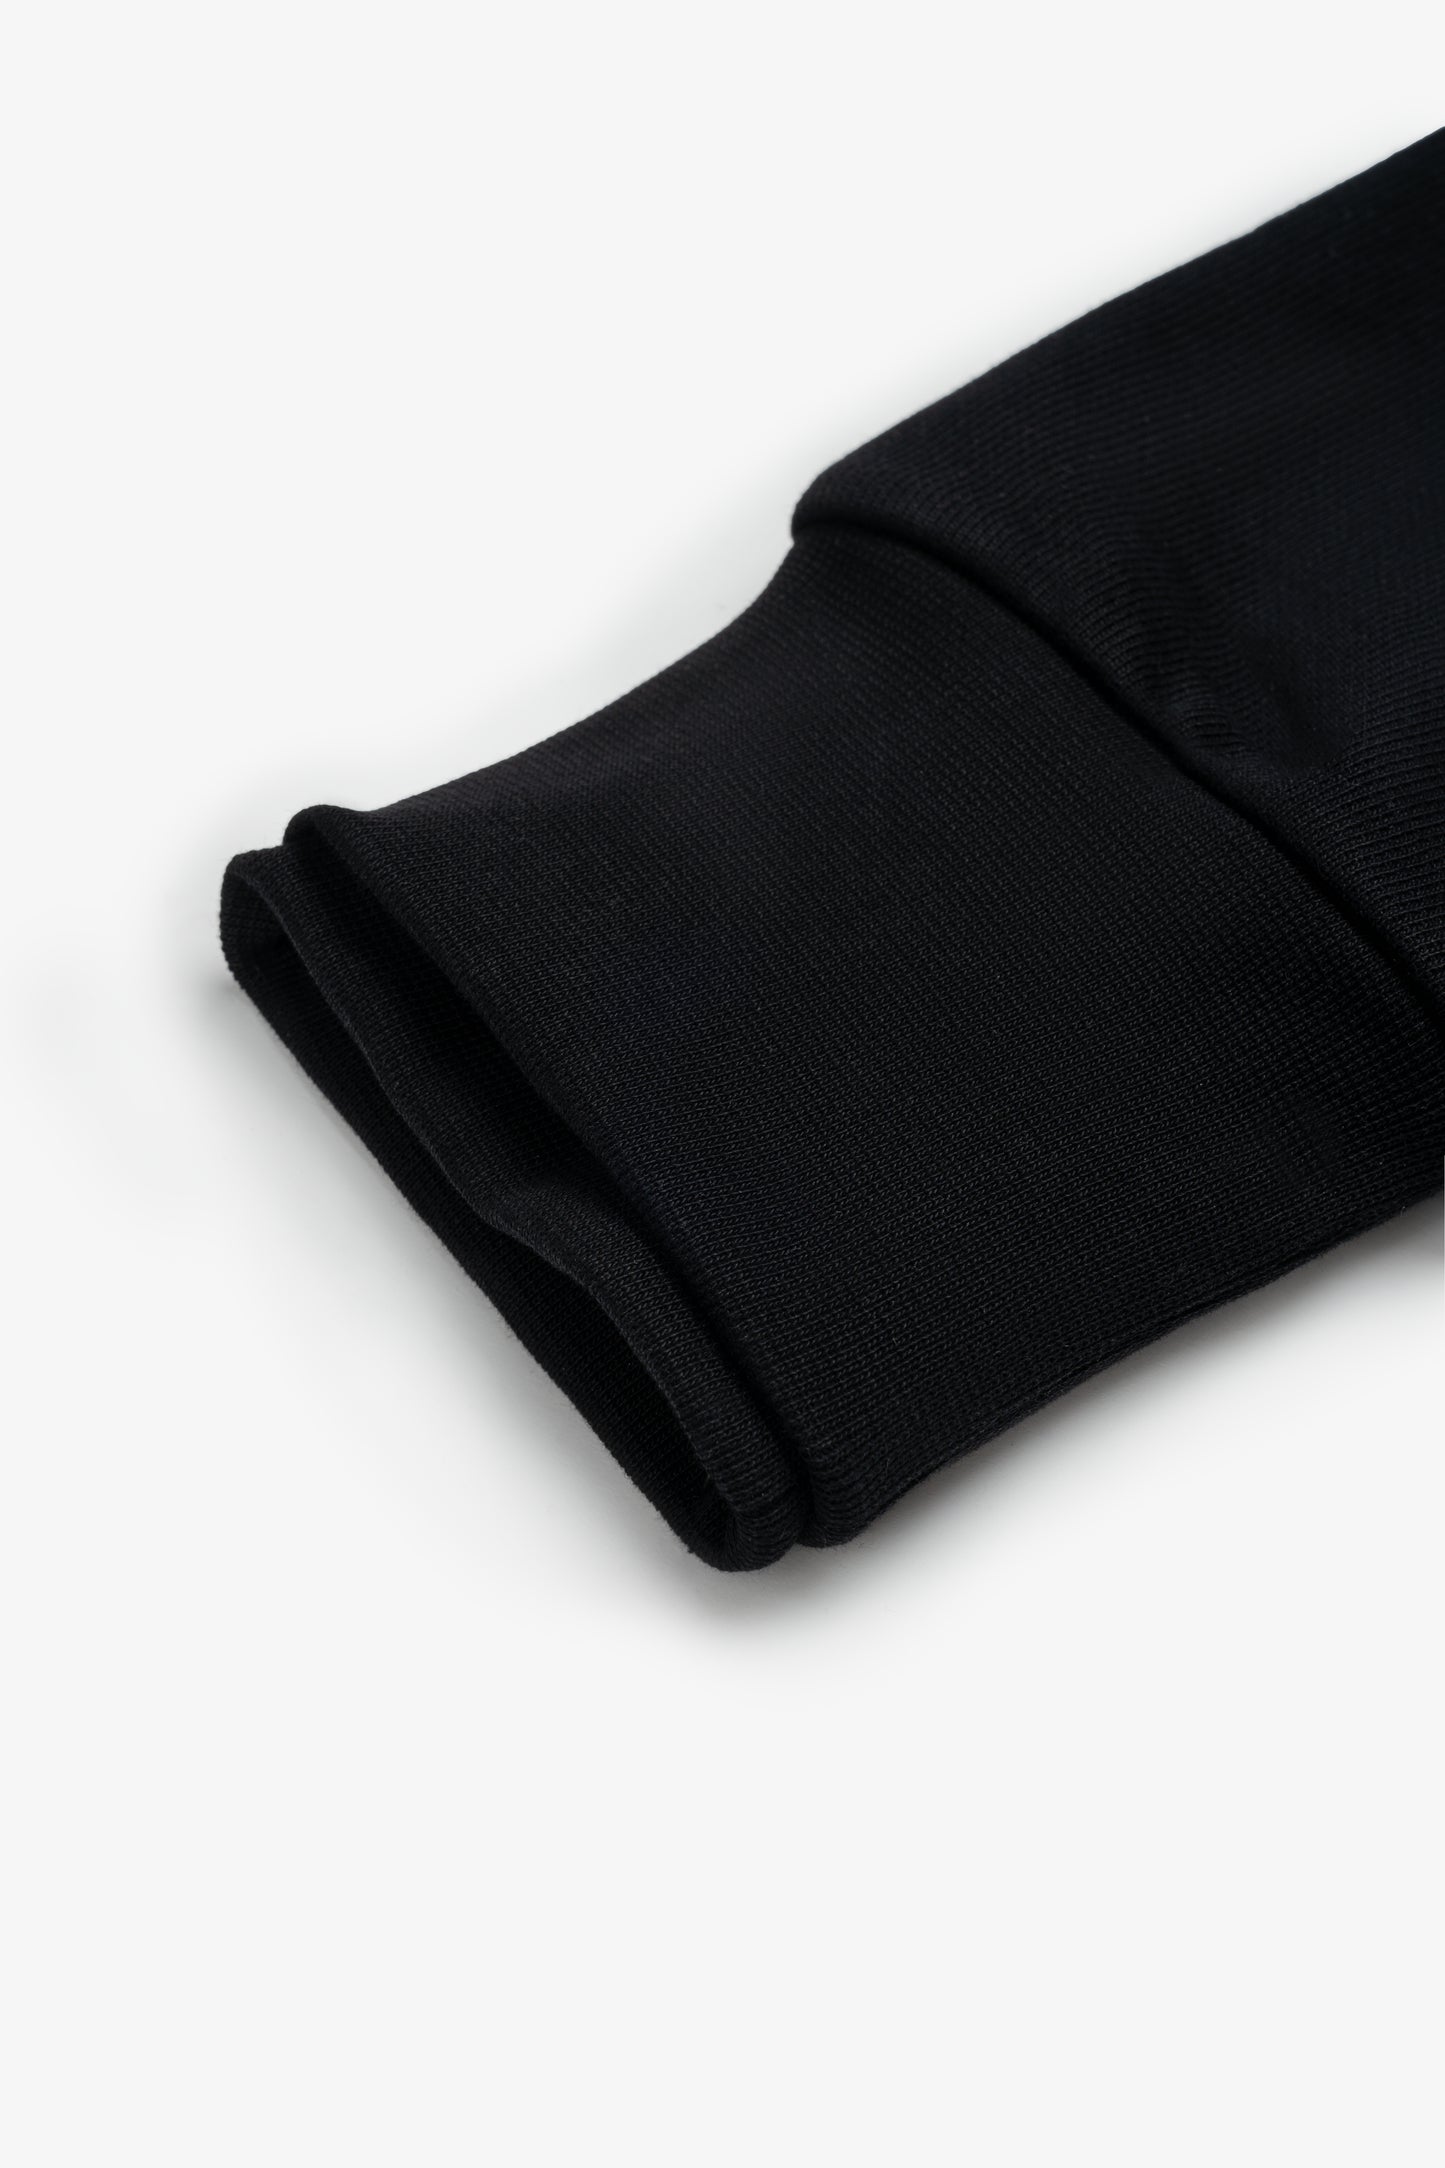 Black basic hoodie sleeve cuff close up